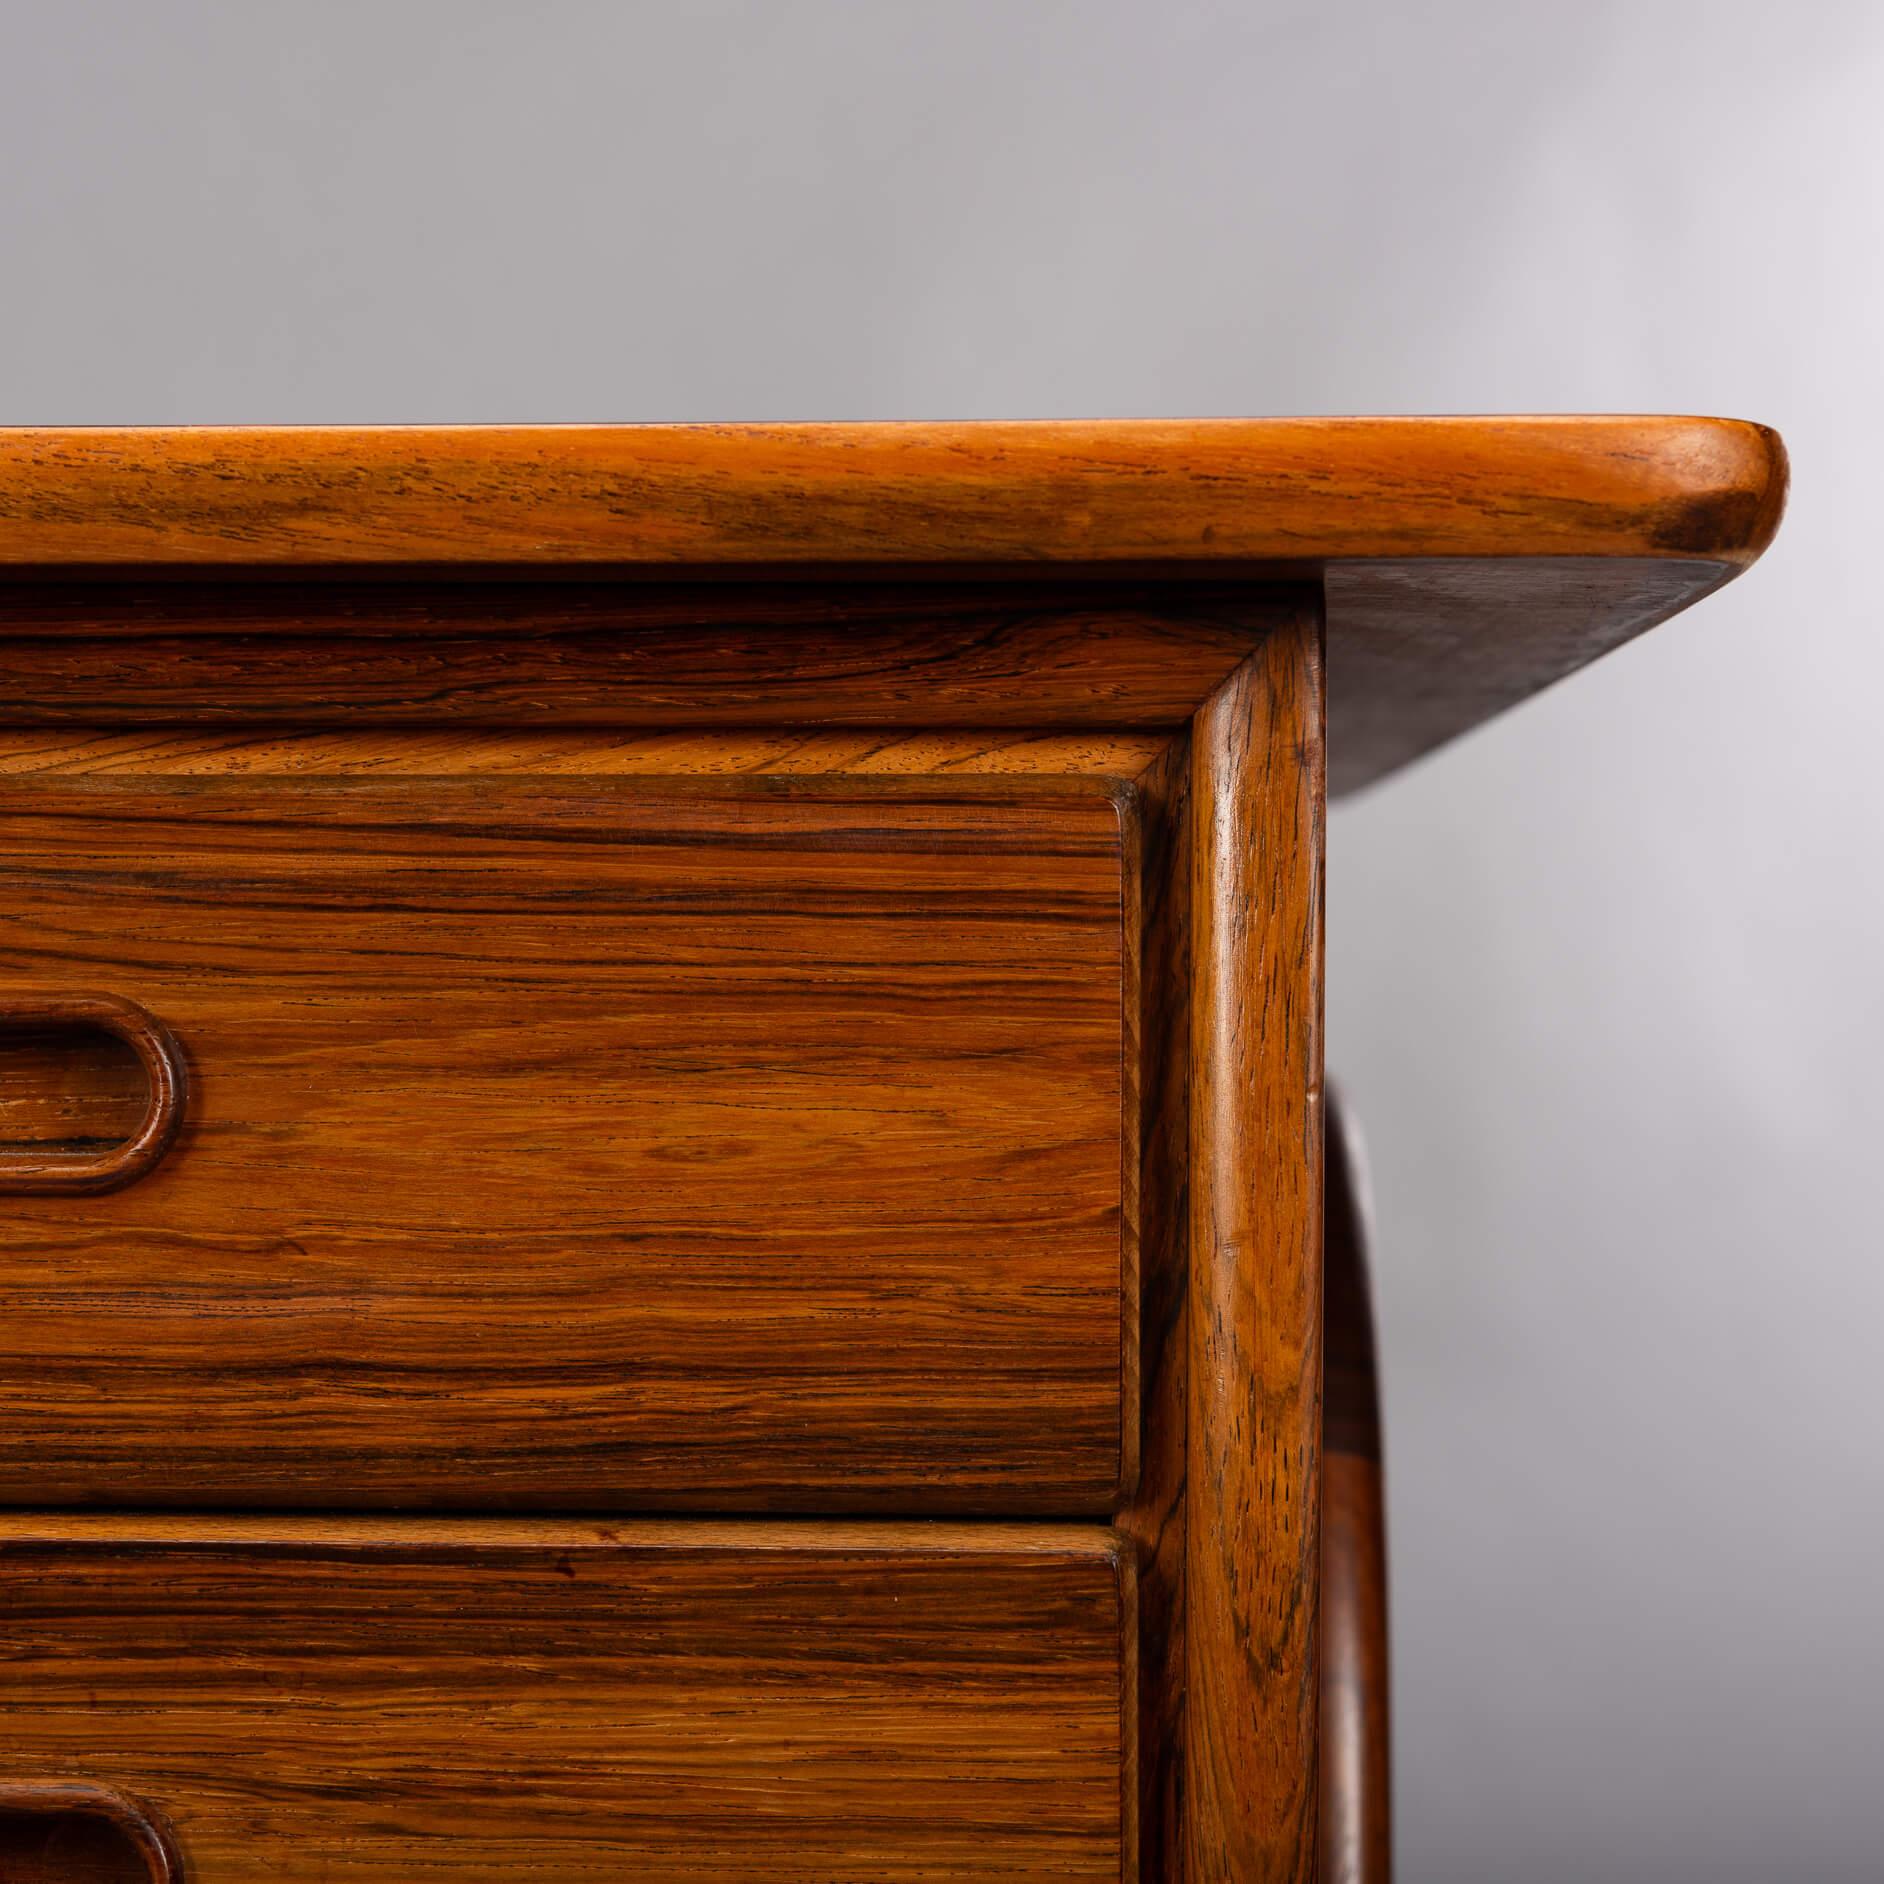 Danish Midcentury Modern Rosewood Desk by Svend Age Madsen for HP Hansen, 1960s For Sale 1